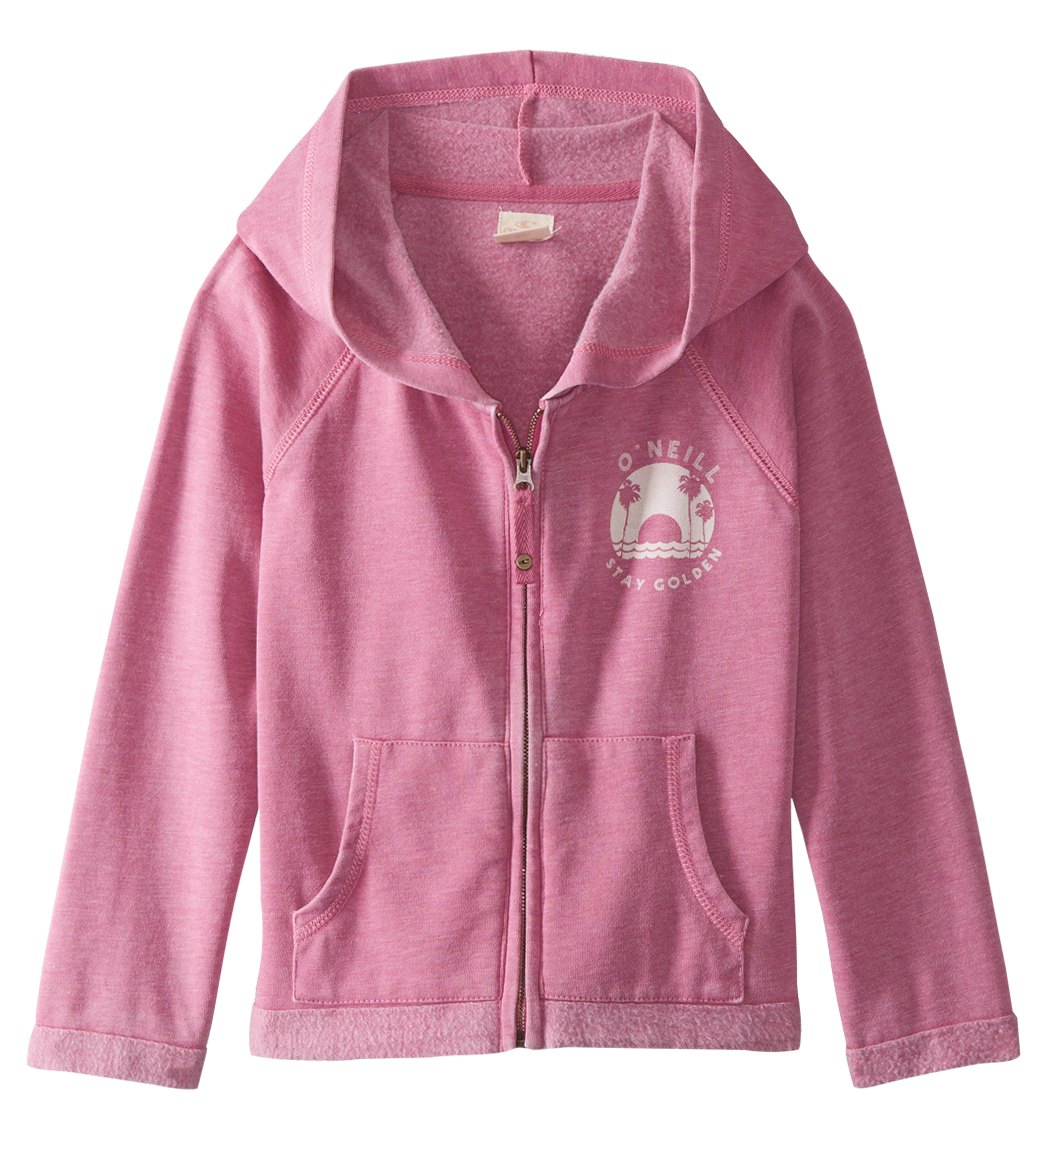 O'neill Girls' Coastline Zip Up Fleece Jacket Toddler Kid - Purple 4 Cotton/Polyester - Swimoutlet.com